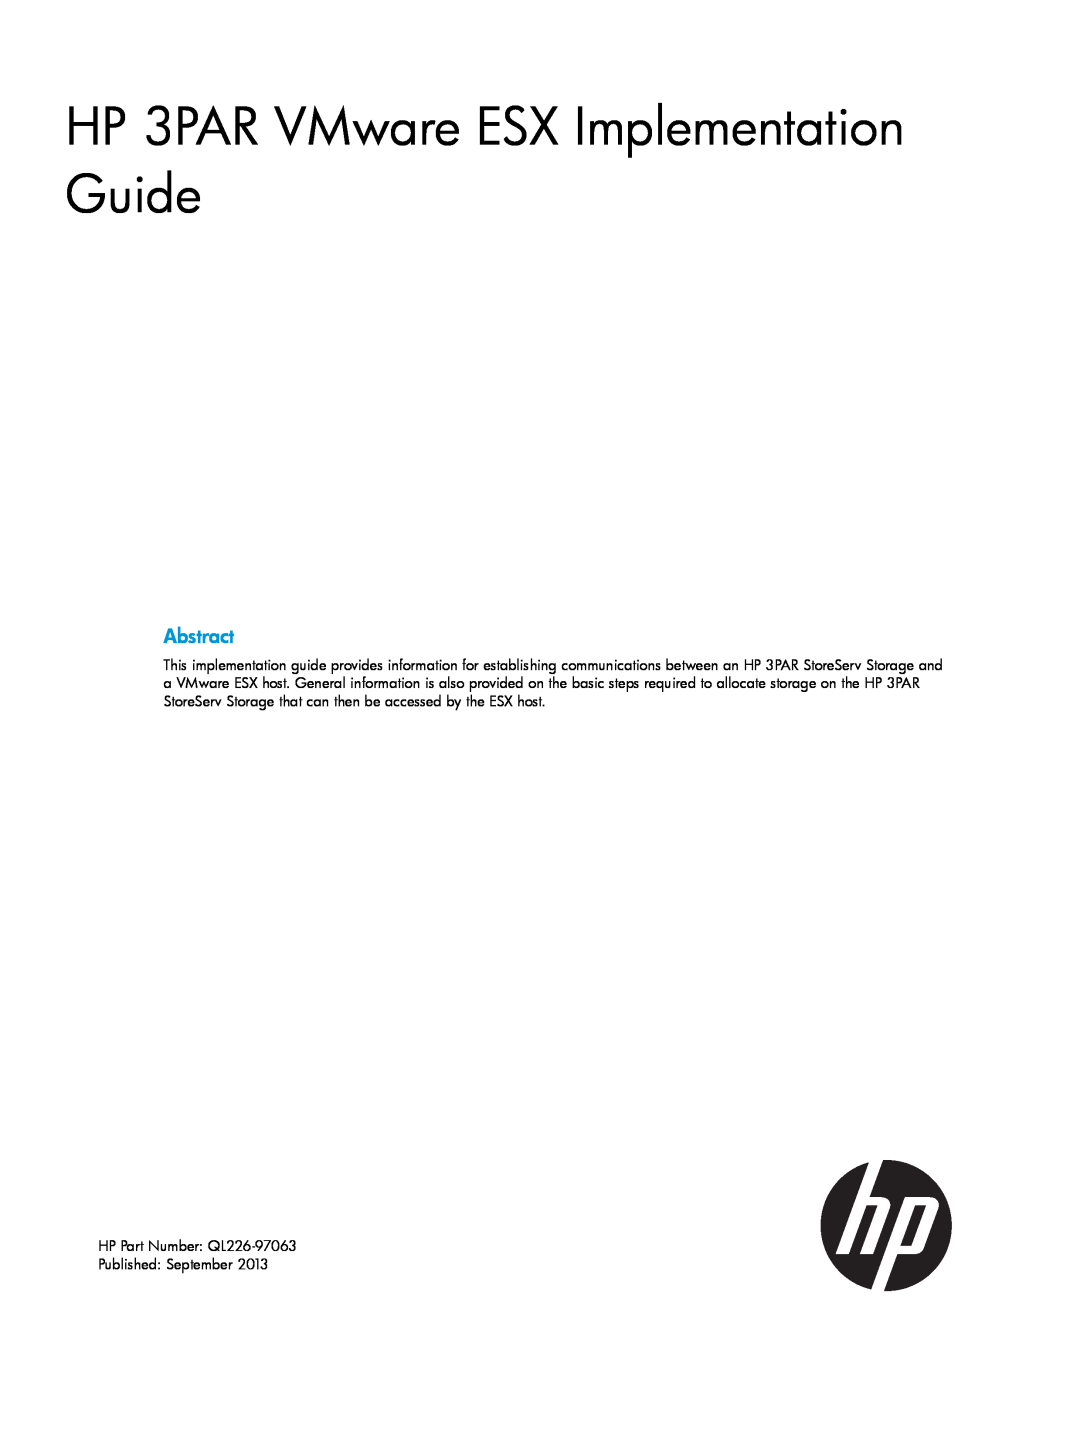 HP QR516B manual Abstract, HP 3PAR VMware ESX Implementation Guide, HP Part Number QL226-97063 Published September 